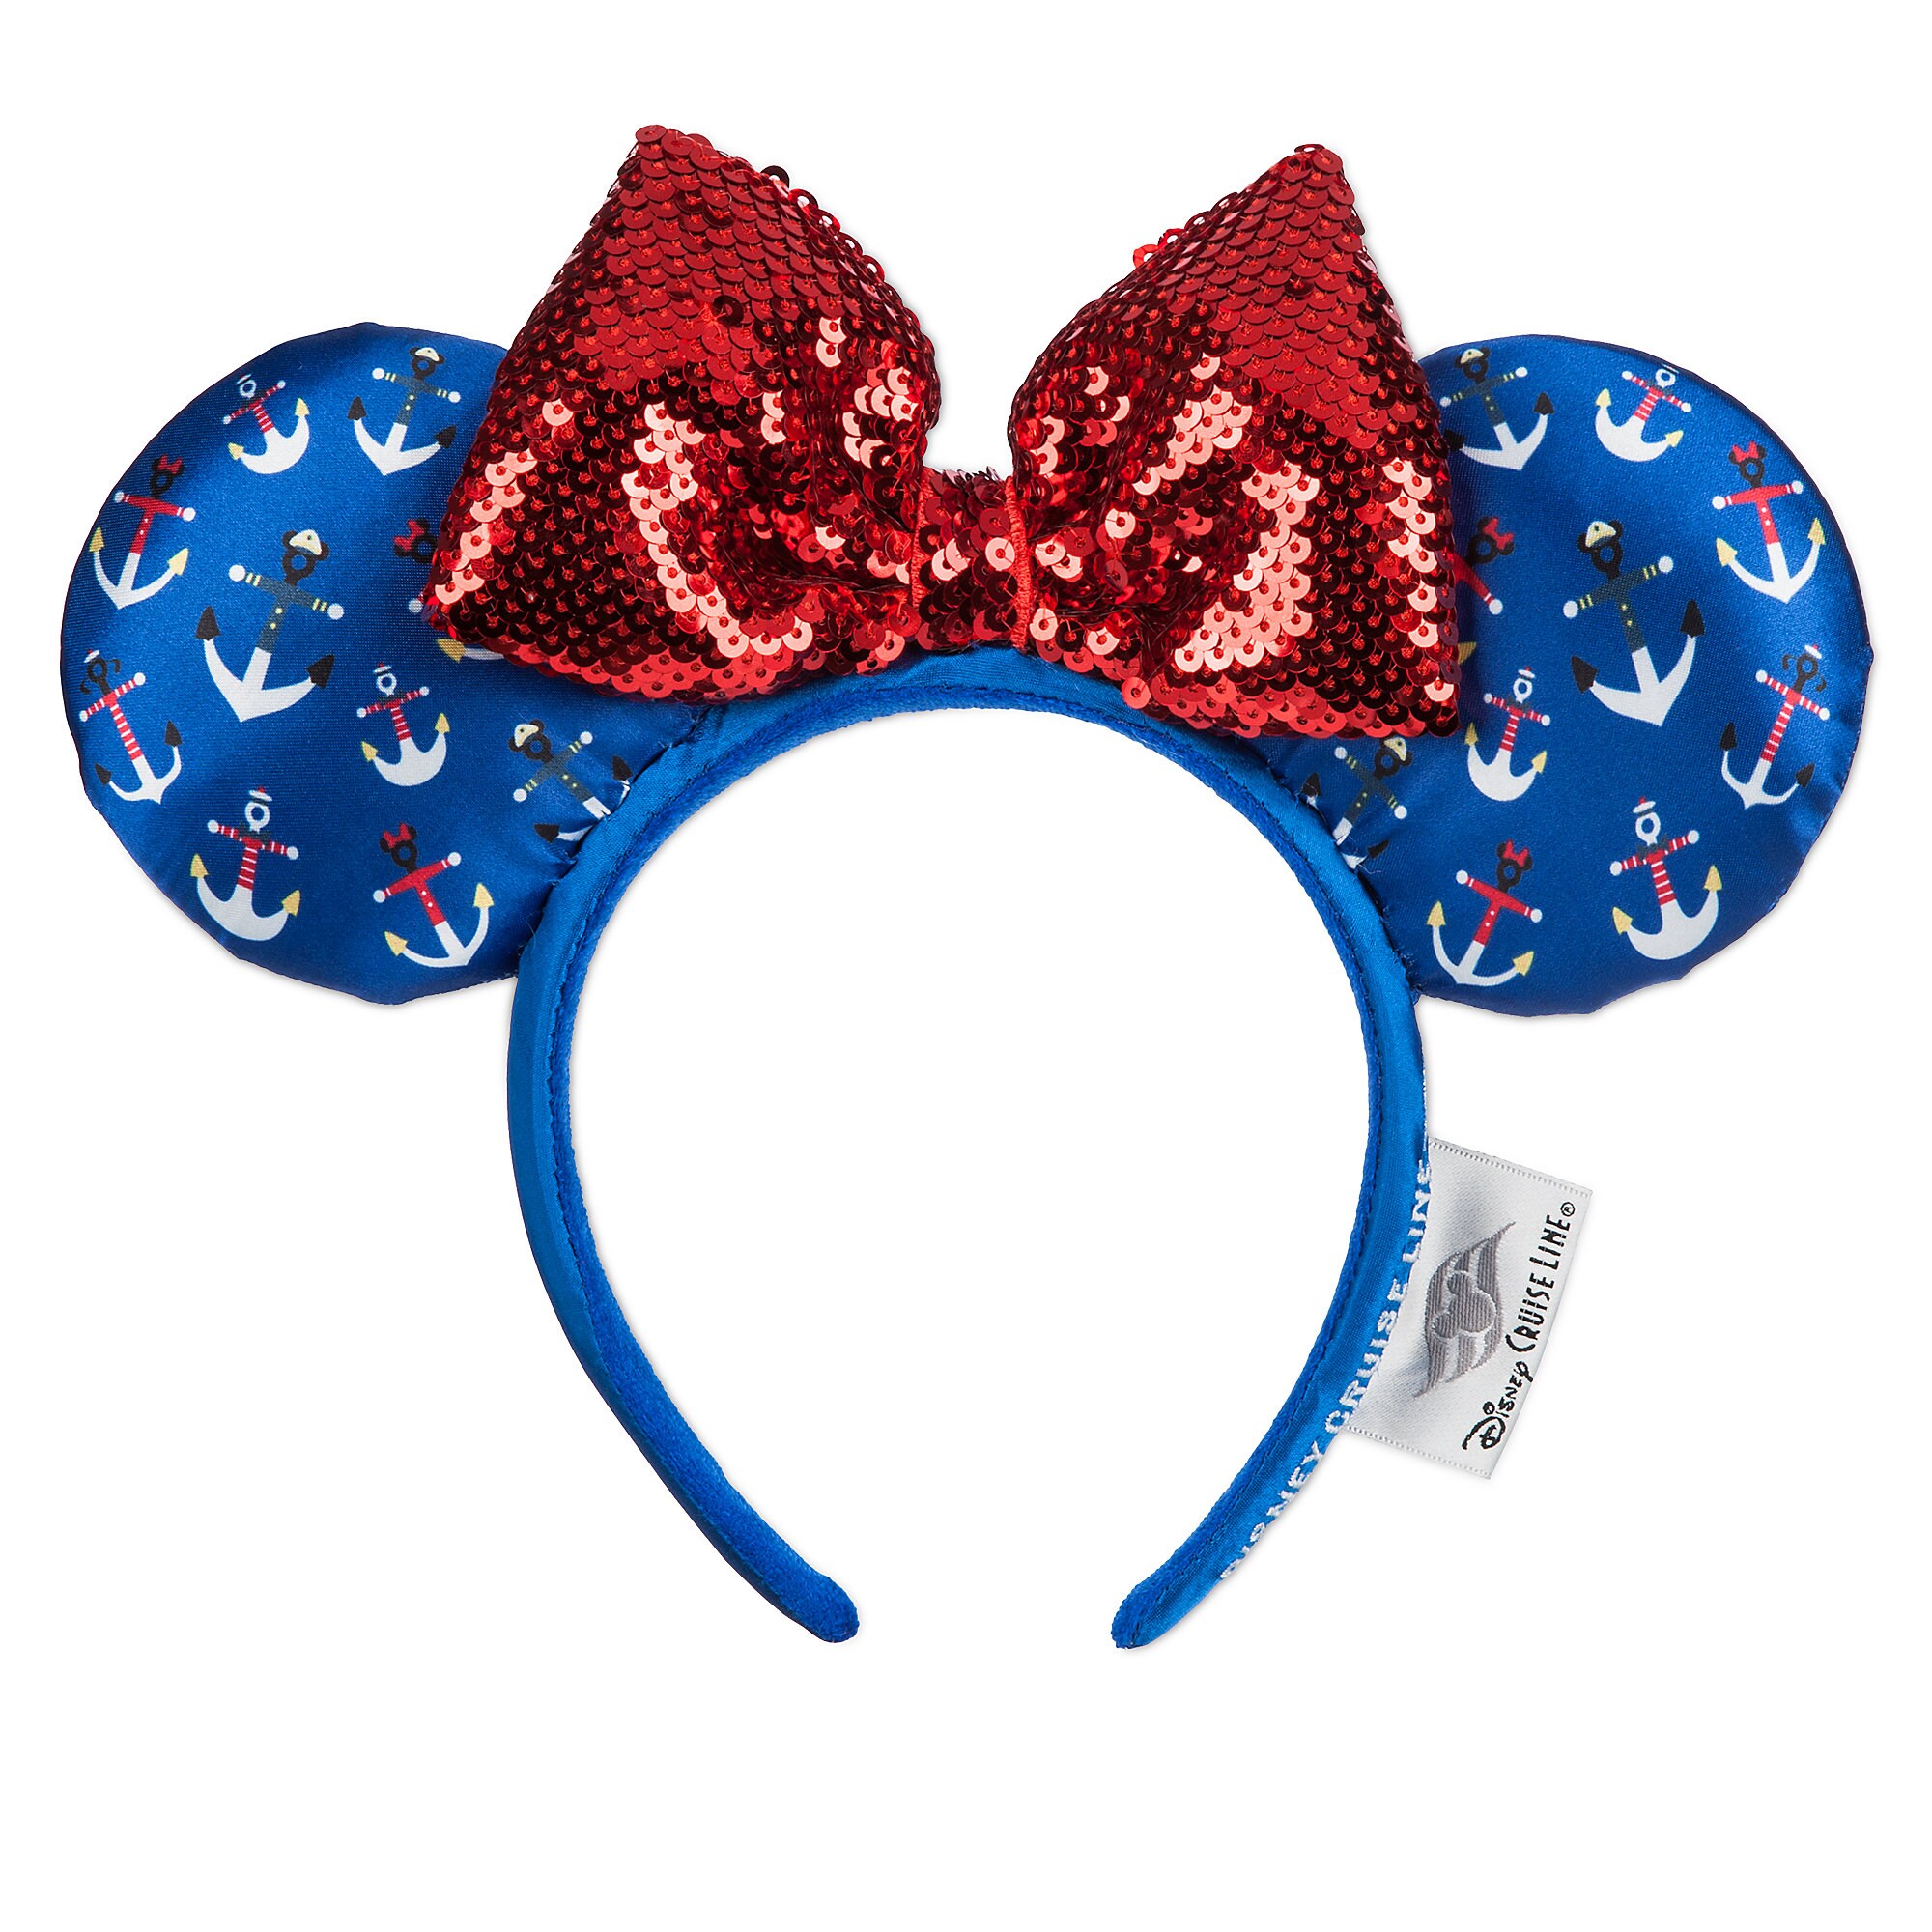 Minnie Mouse Disney Cruise Line Ear Headband is available